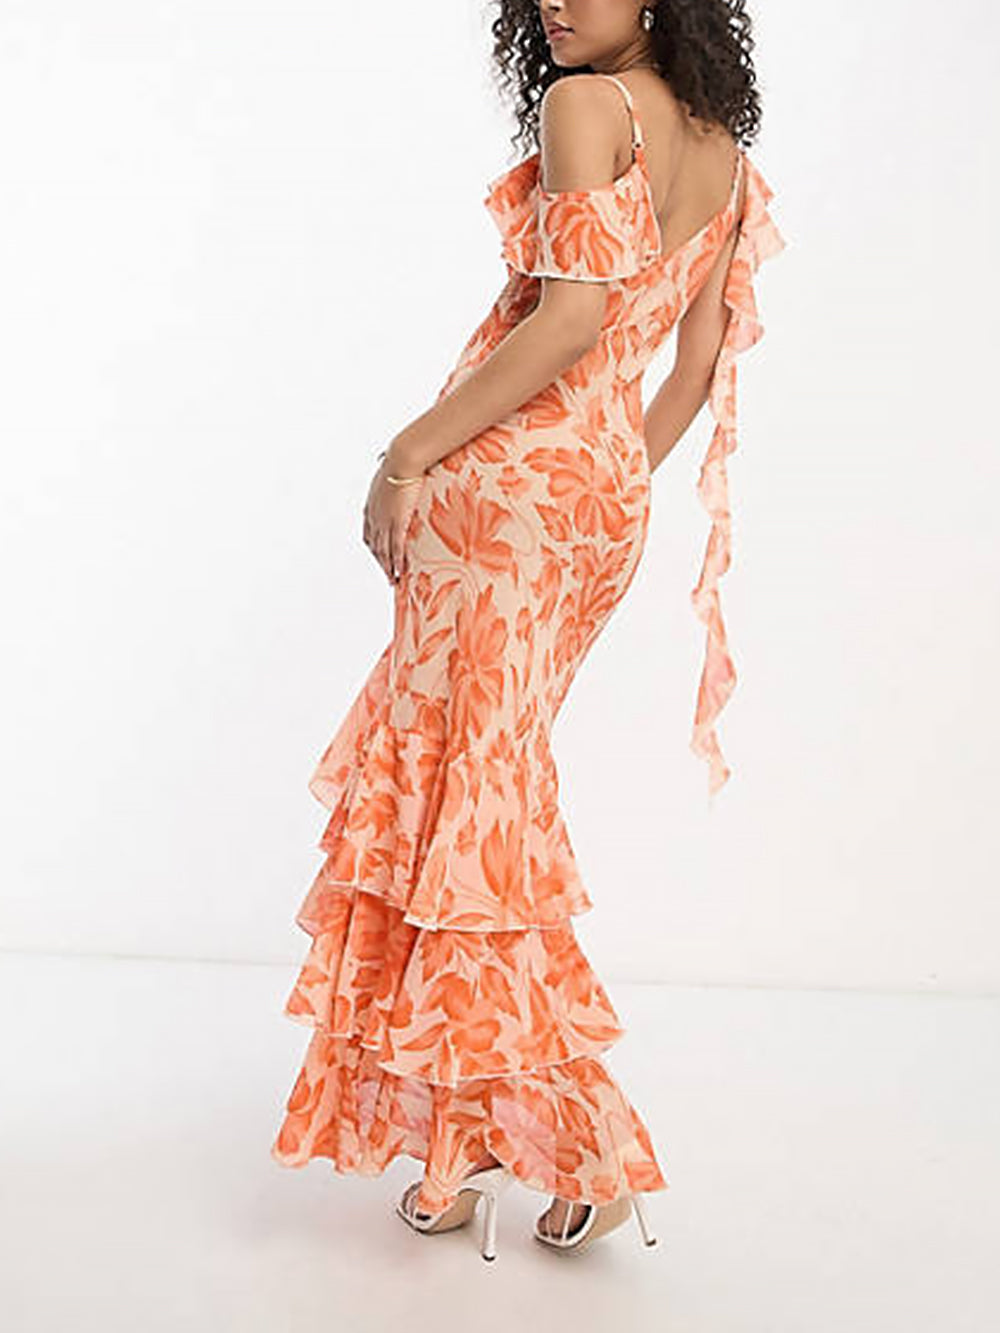 Shoulder Asymmetric Maxi Dress In Orange Floral Jacquard